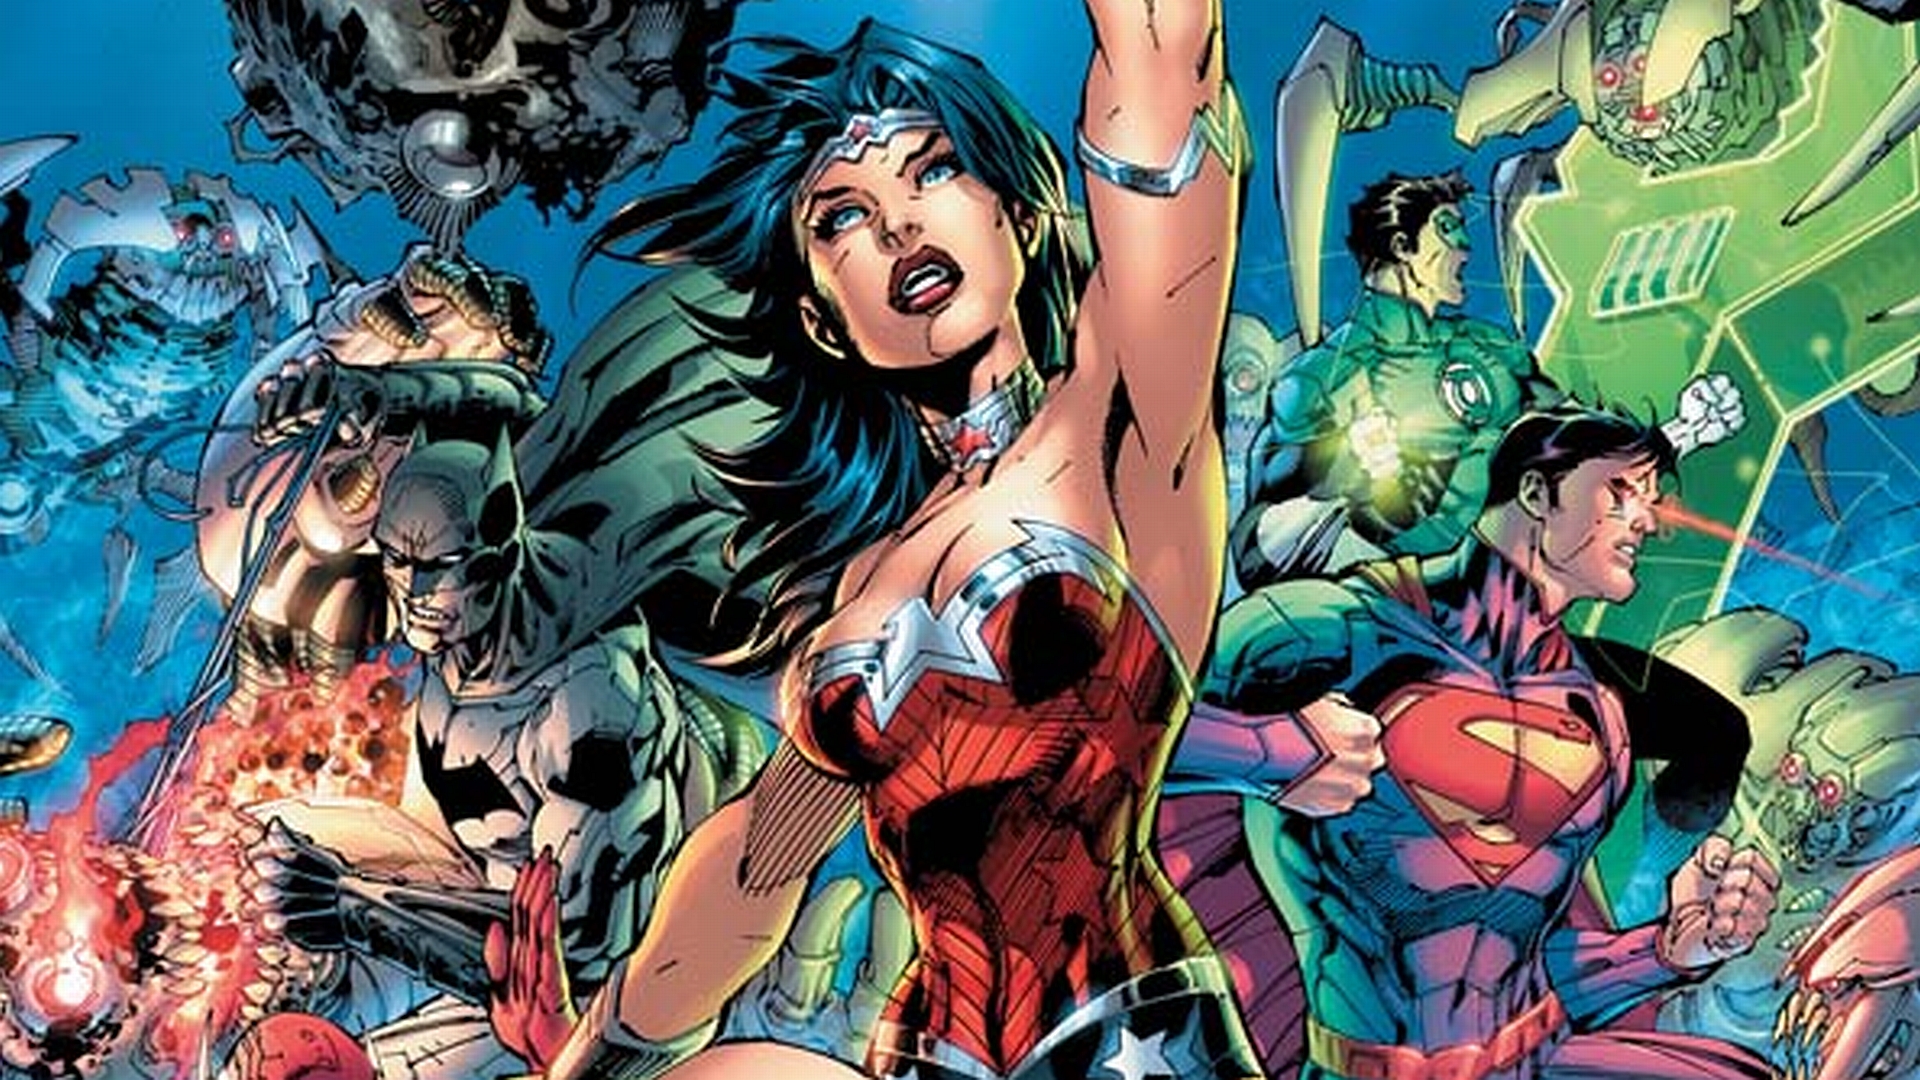 A powerful lineup of DC Comics heroes from The New 52 era: Batman, Wonder Woman, Green Lantern, and Superman.